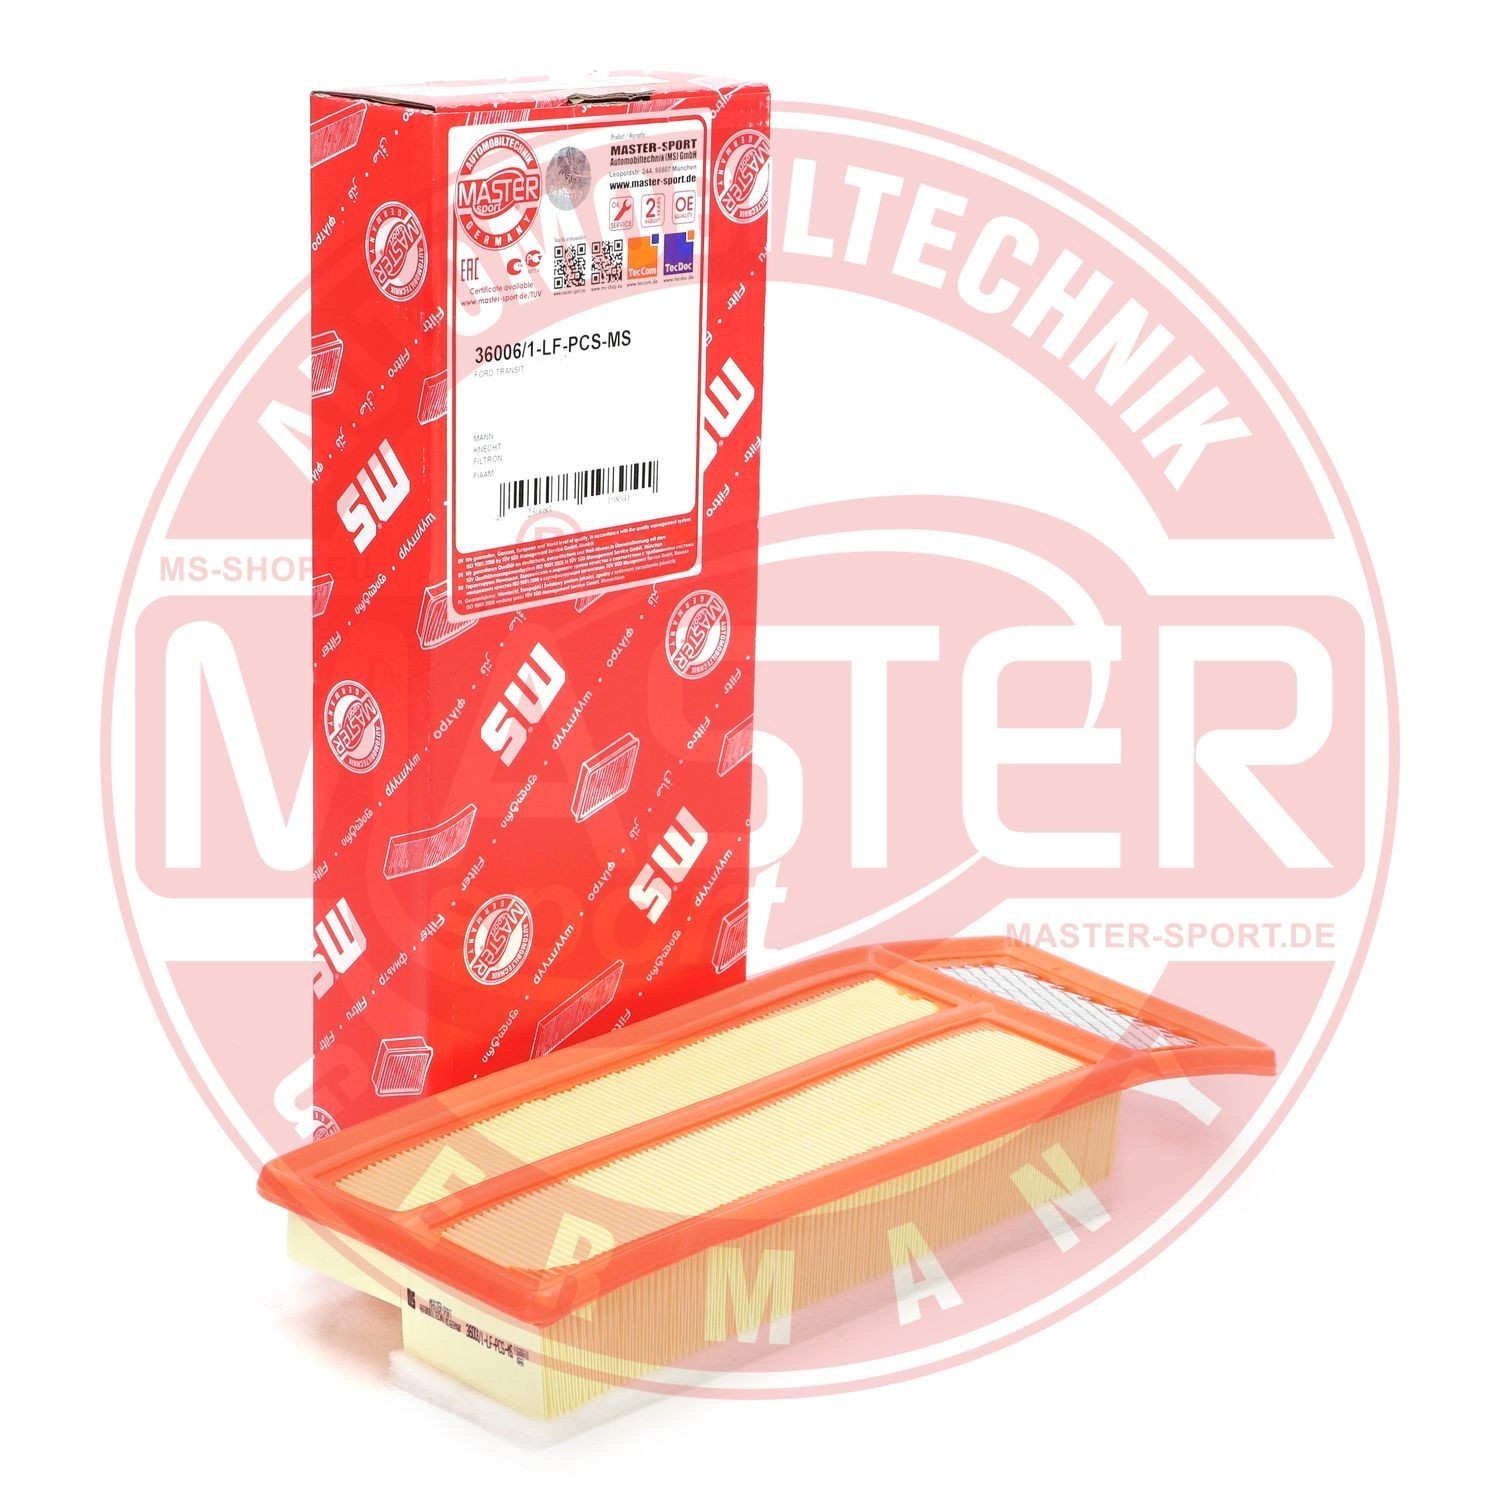 MASTER-SPORT 36006/1-LF-PCS-MS Air filter 53mm, 131mm, 356mm, Air Recirculation Filter